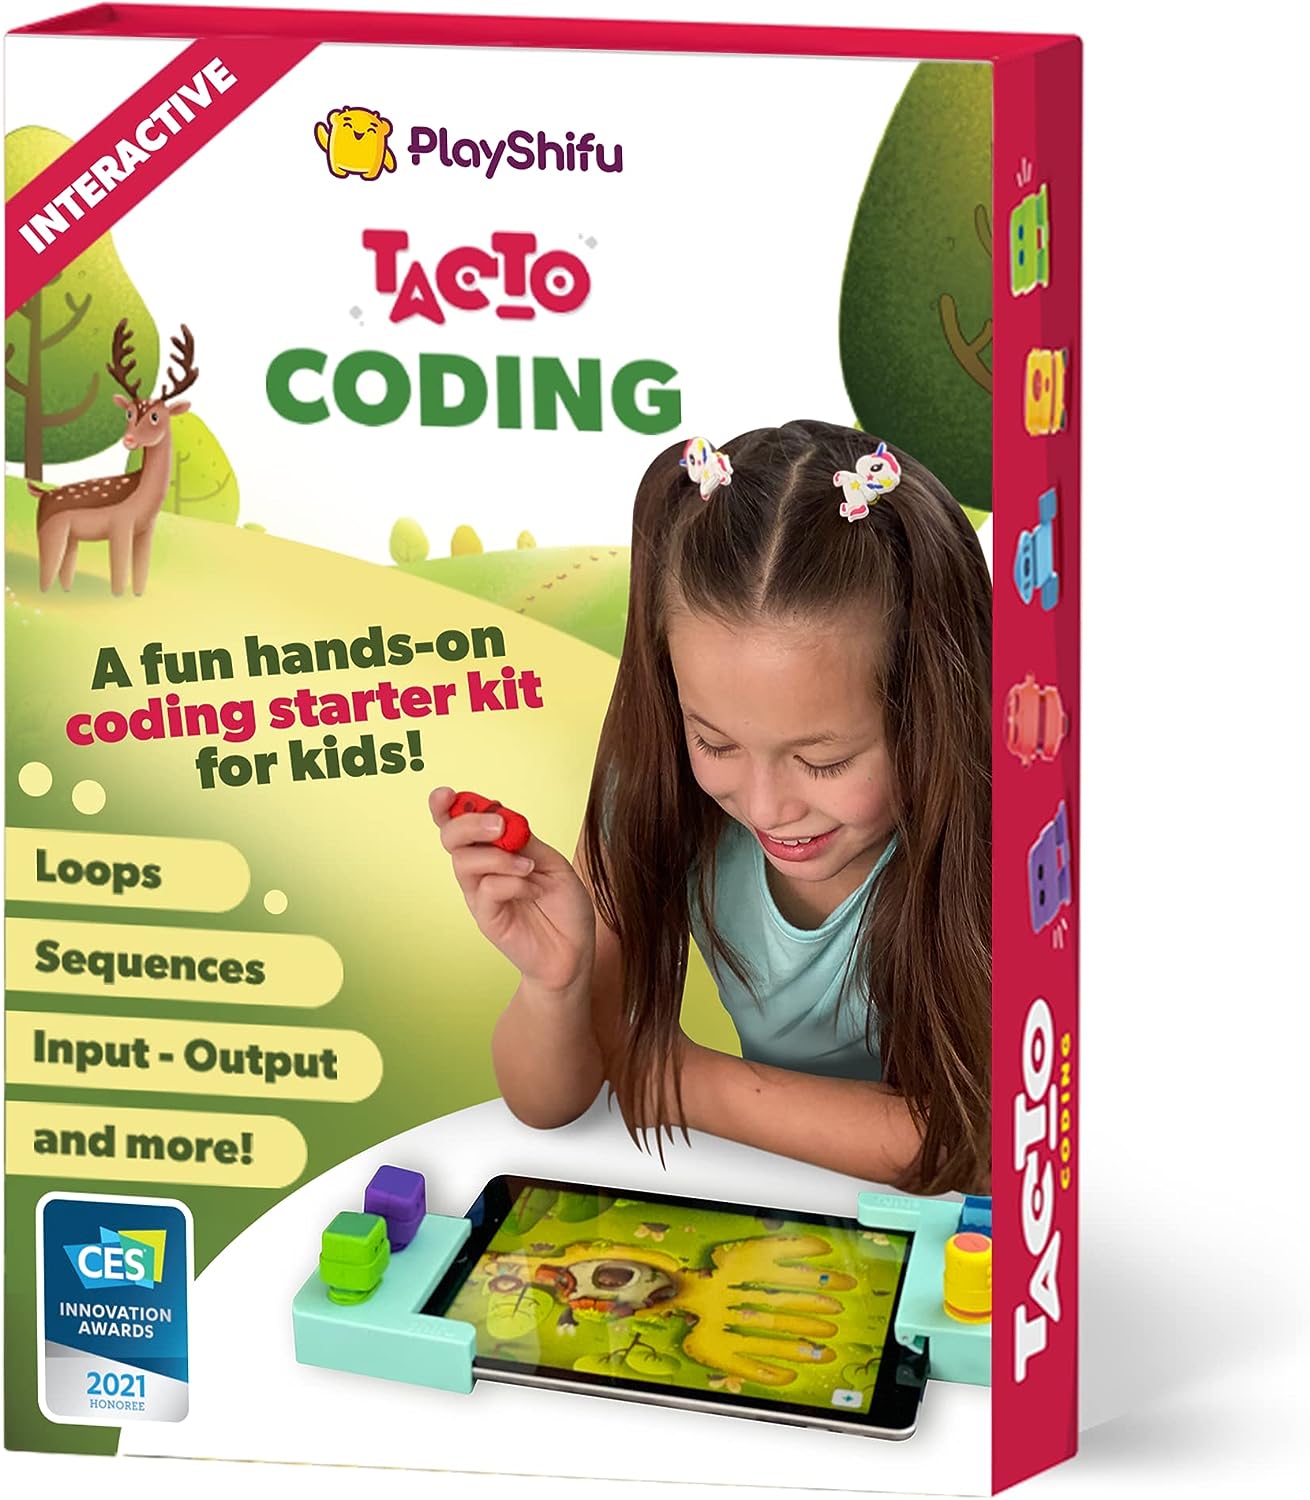 Playshifu-Tacto-Coding